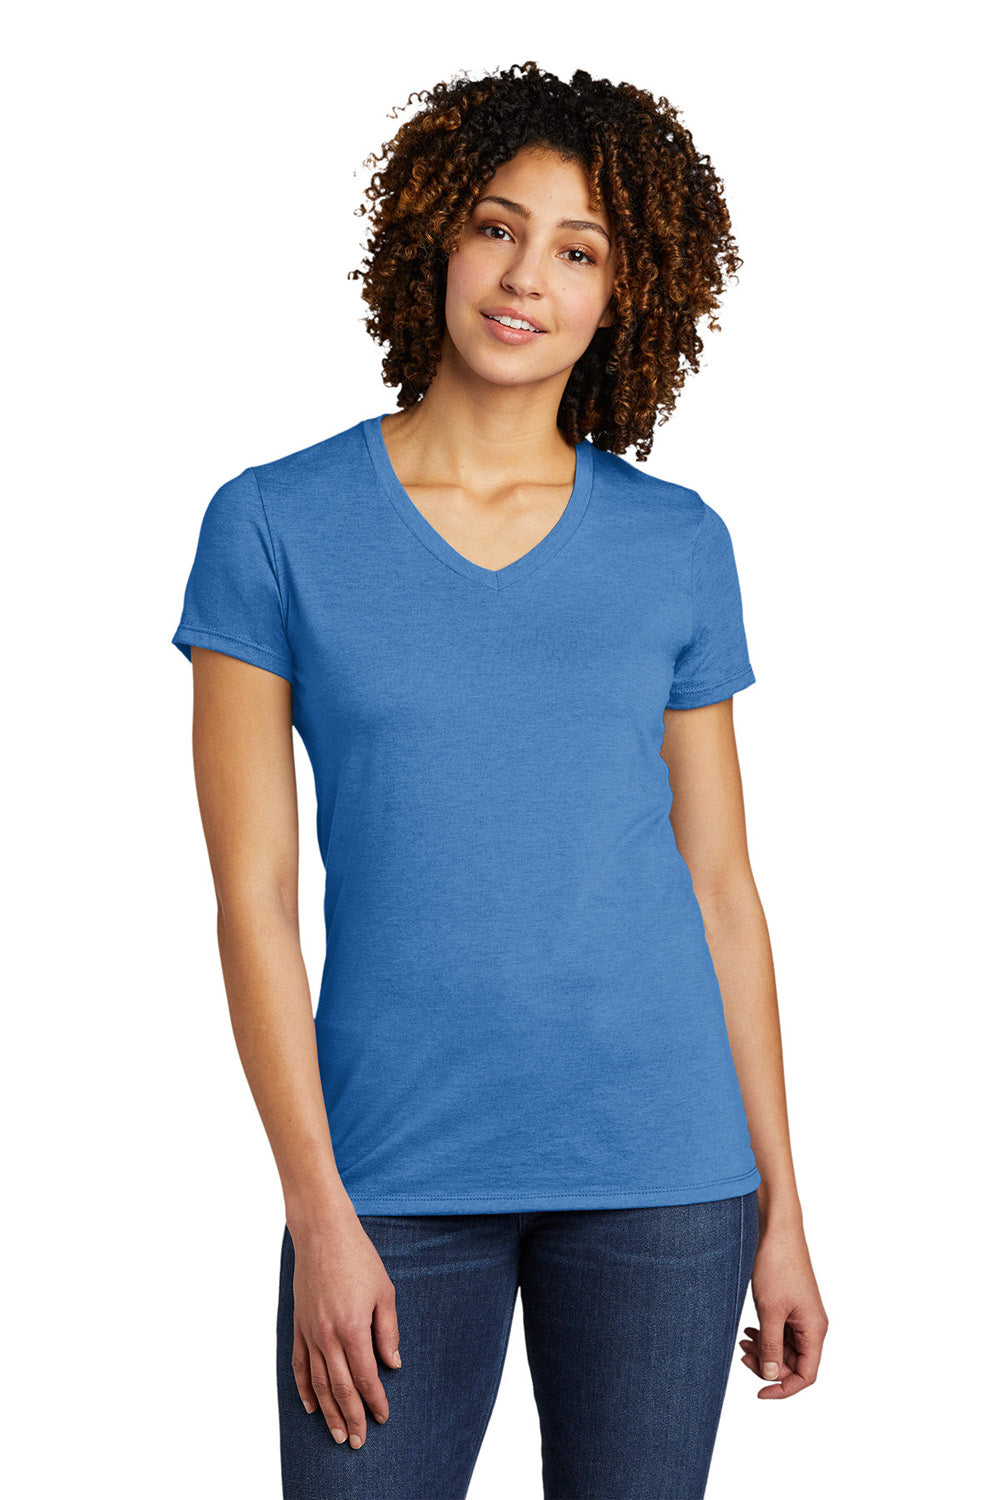 Allmade AL2018 Womens Short Sleeve V-Neck T-Shirt Azure Blue Model Front